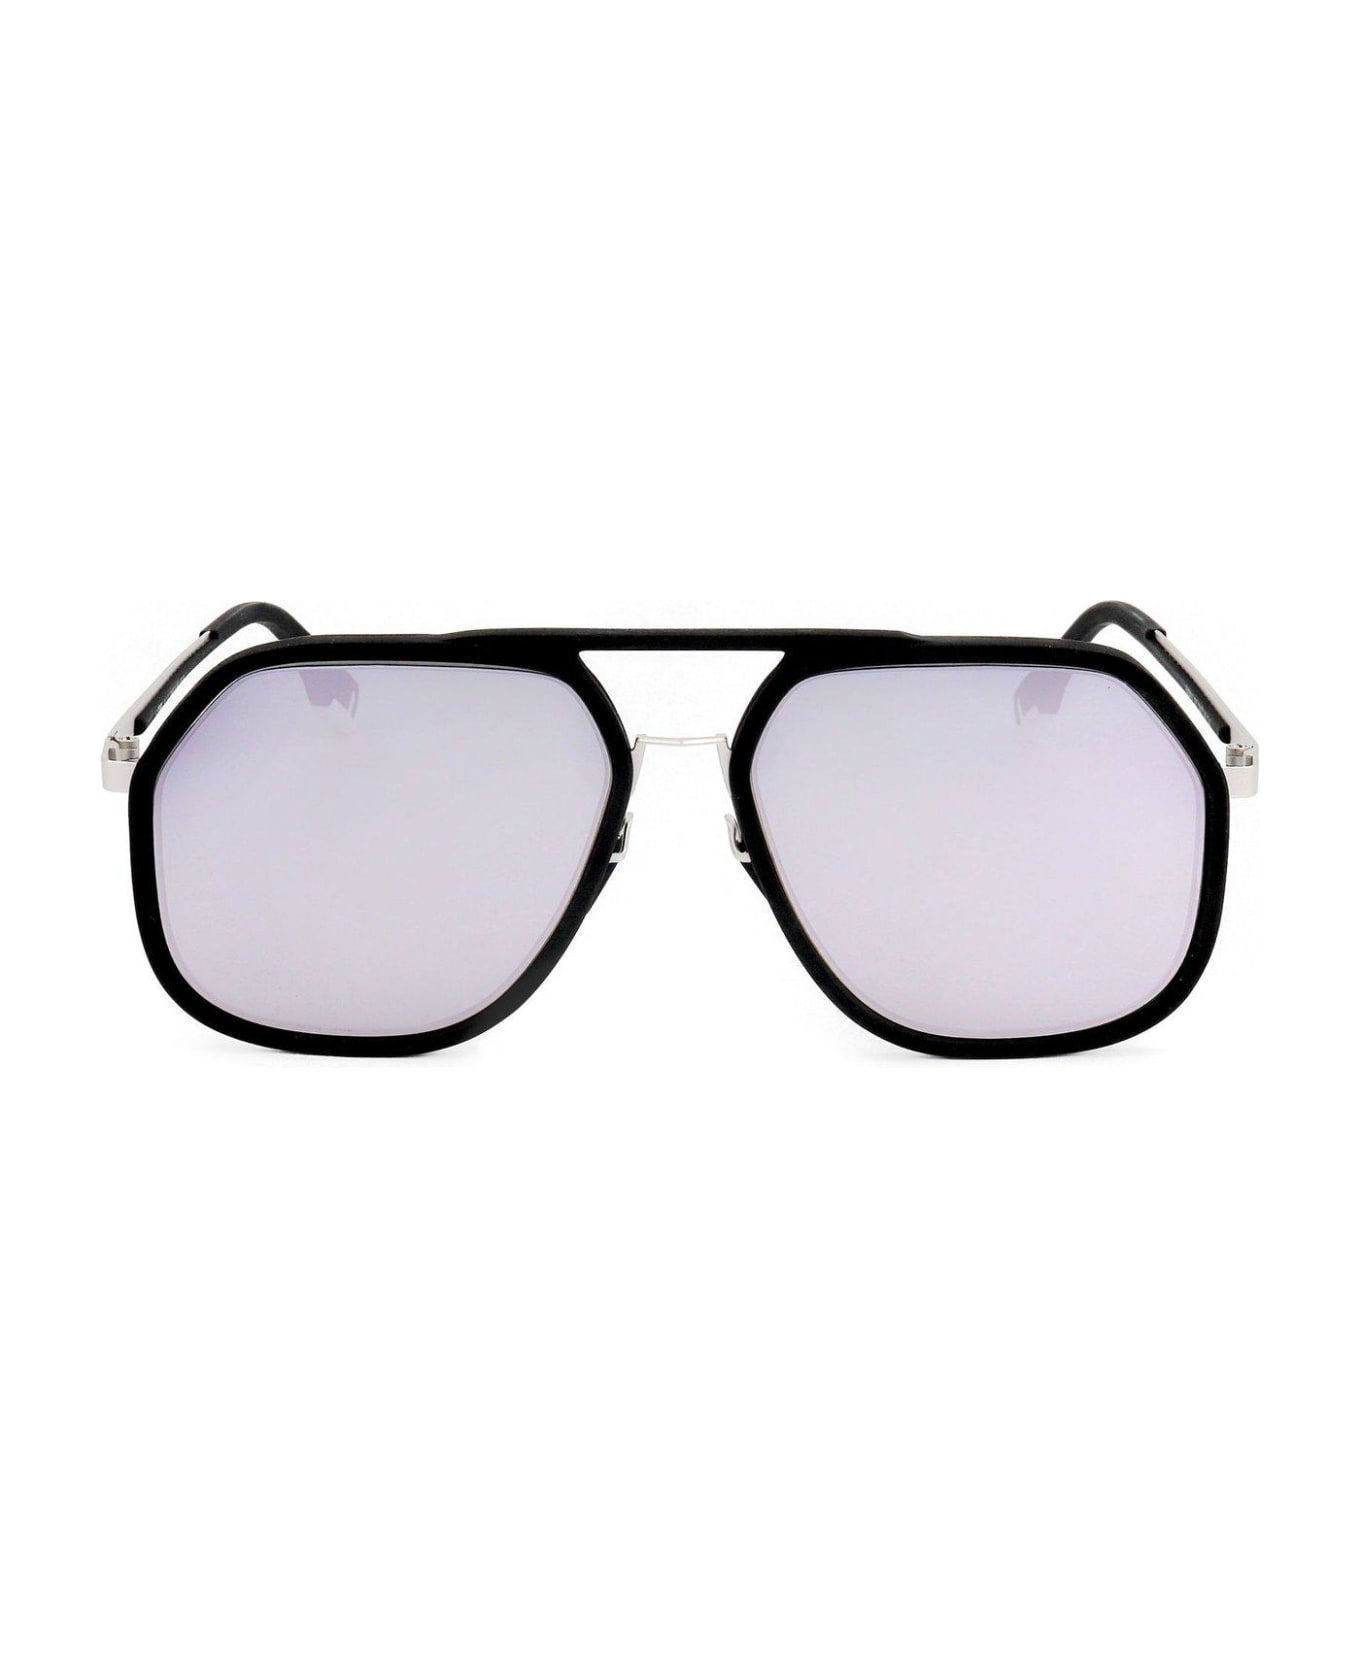 Fendi Eyewear Pilot Frame Sunglasses - 02c